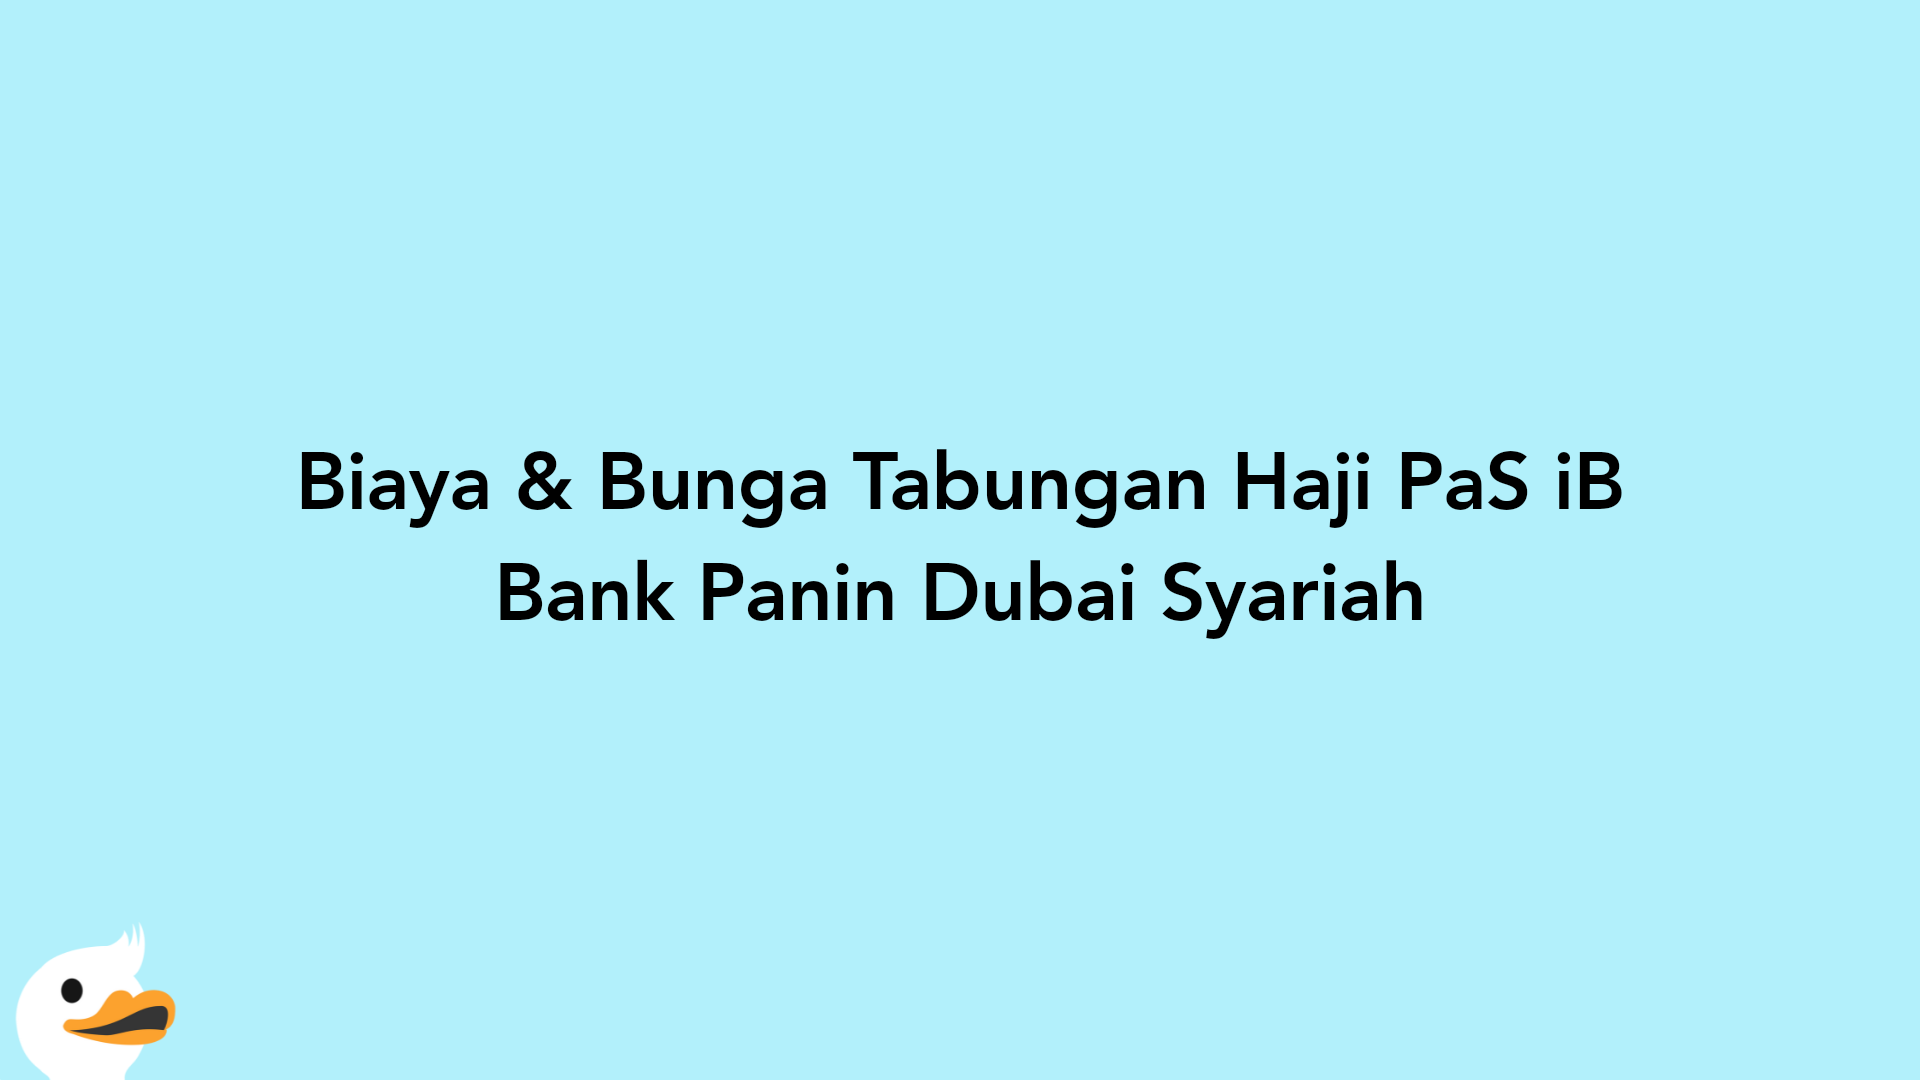 Biaya & Bunga Tabungan Haji PaS iB Bank Panin Dubai Syariah